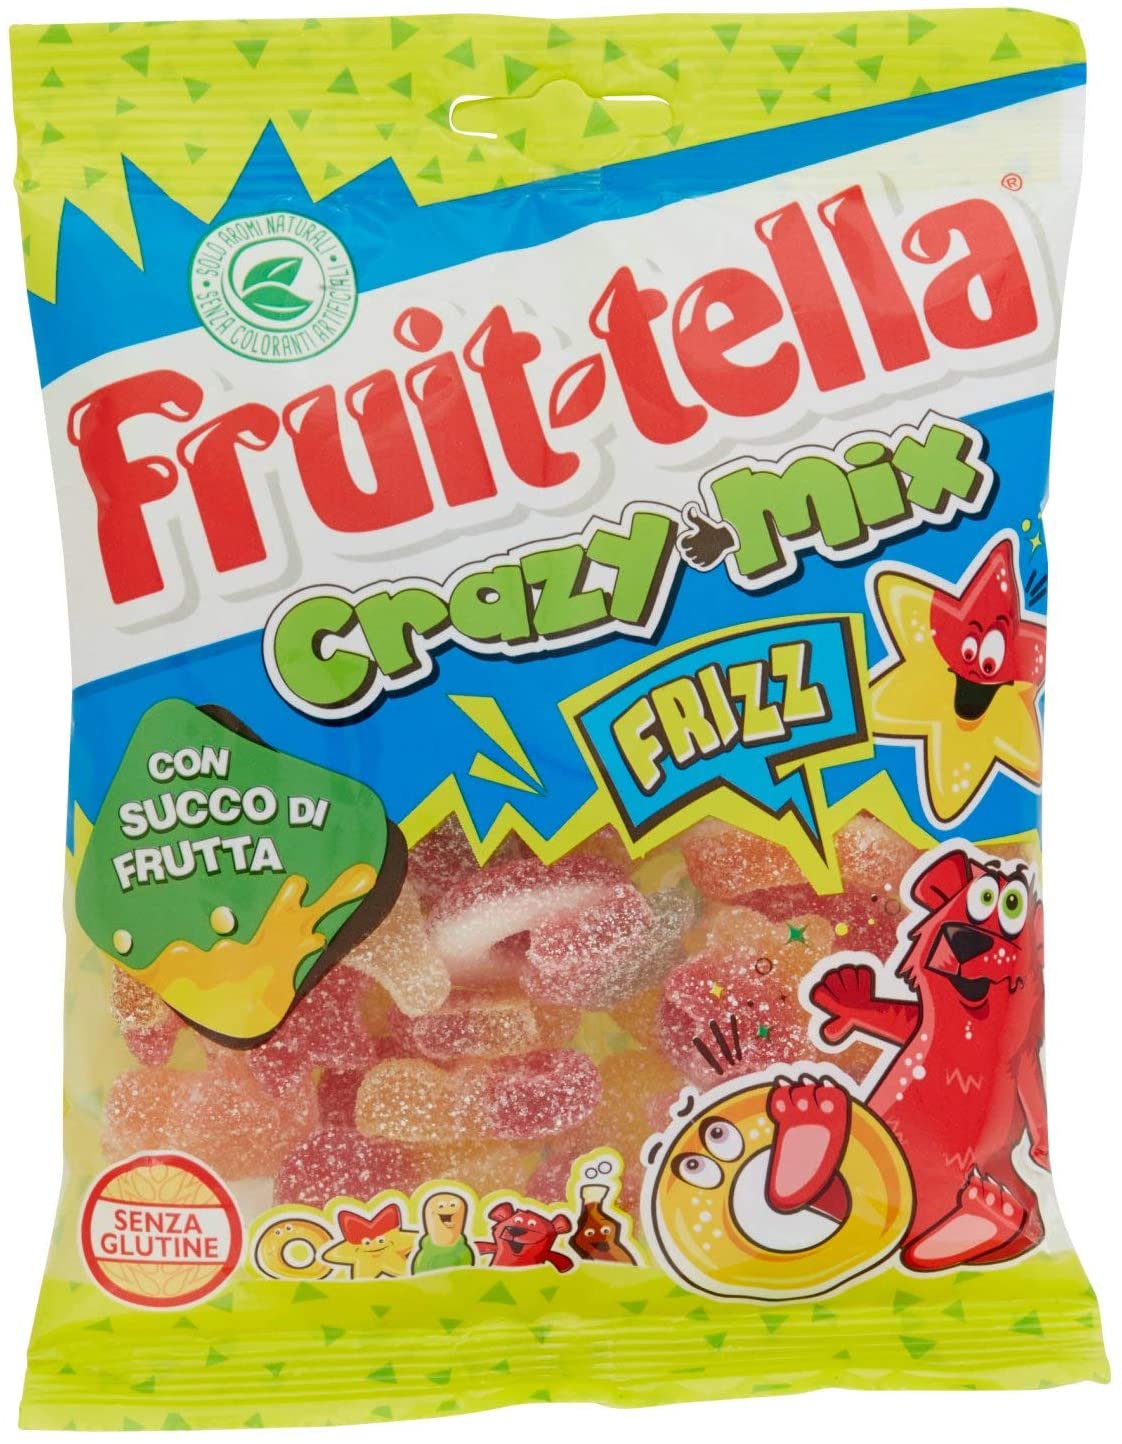 Fruit-tella Crazy Mix Mini 😍😍 - Il mangiatore di caramelle